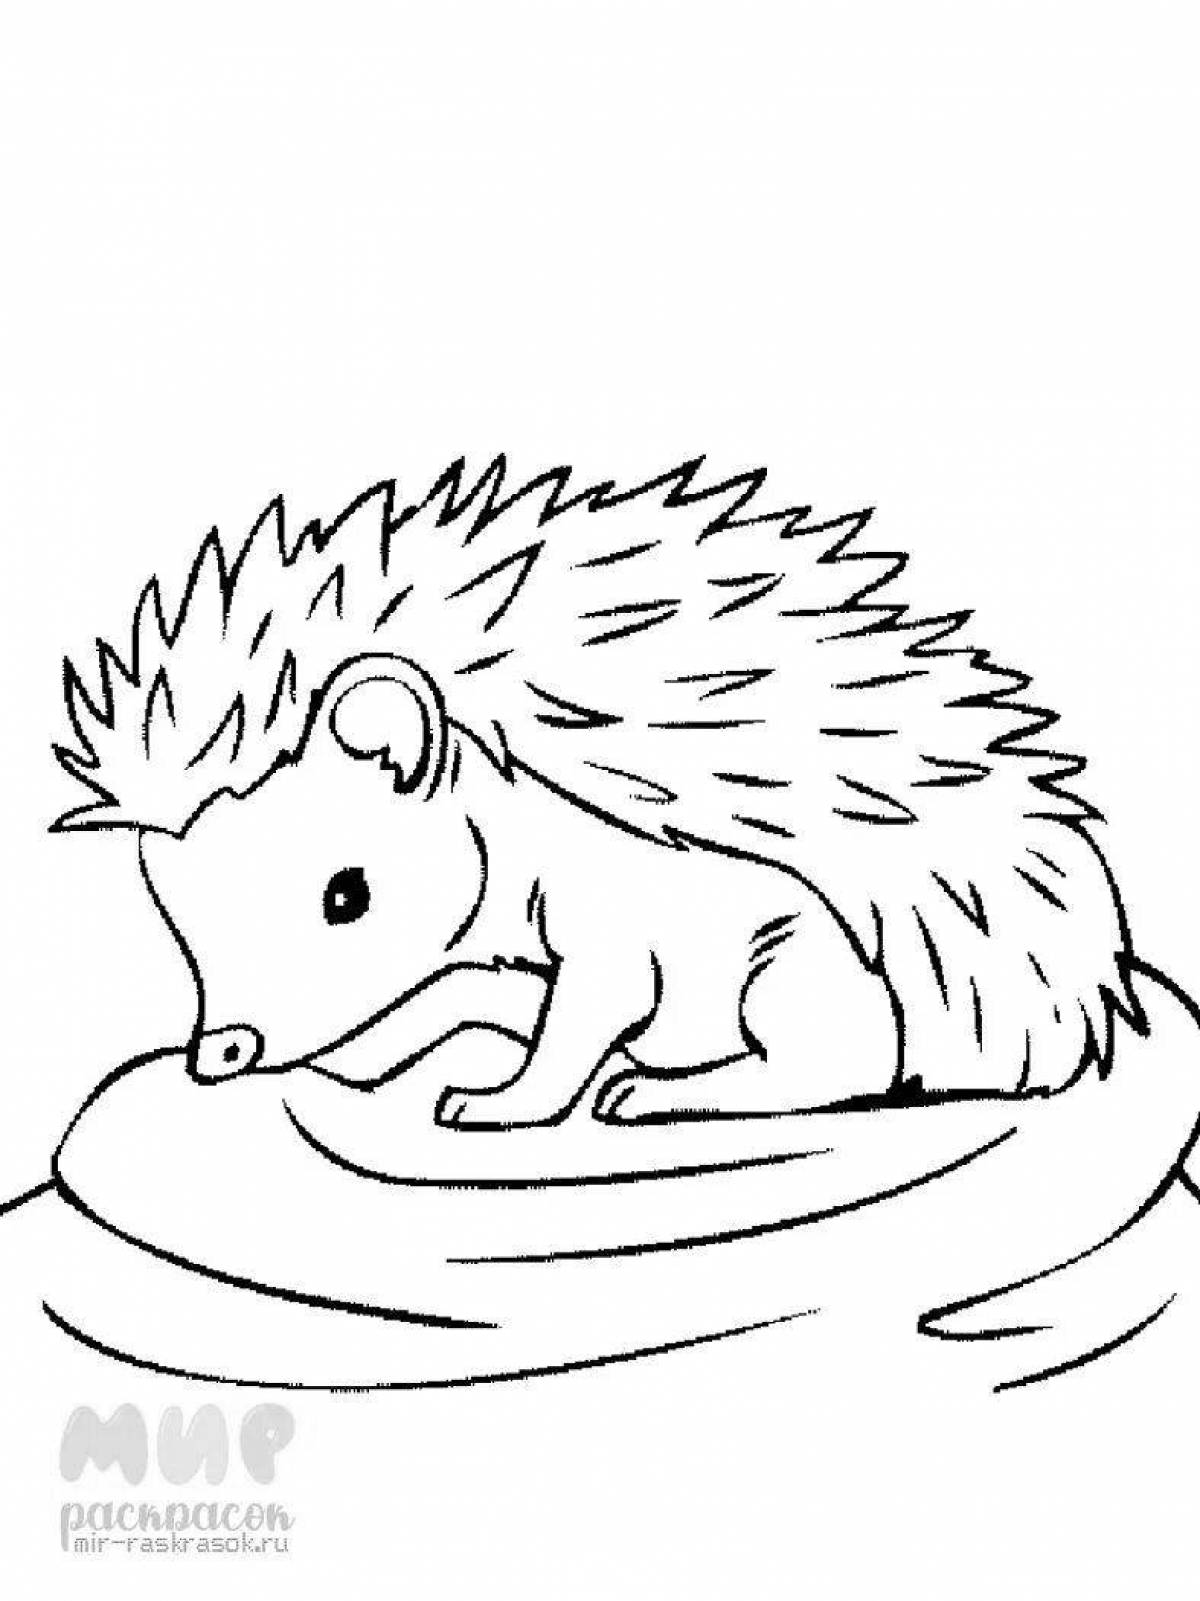 Great hedgehog coloring for juniors